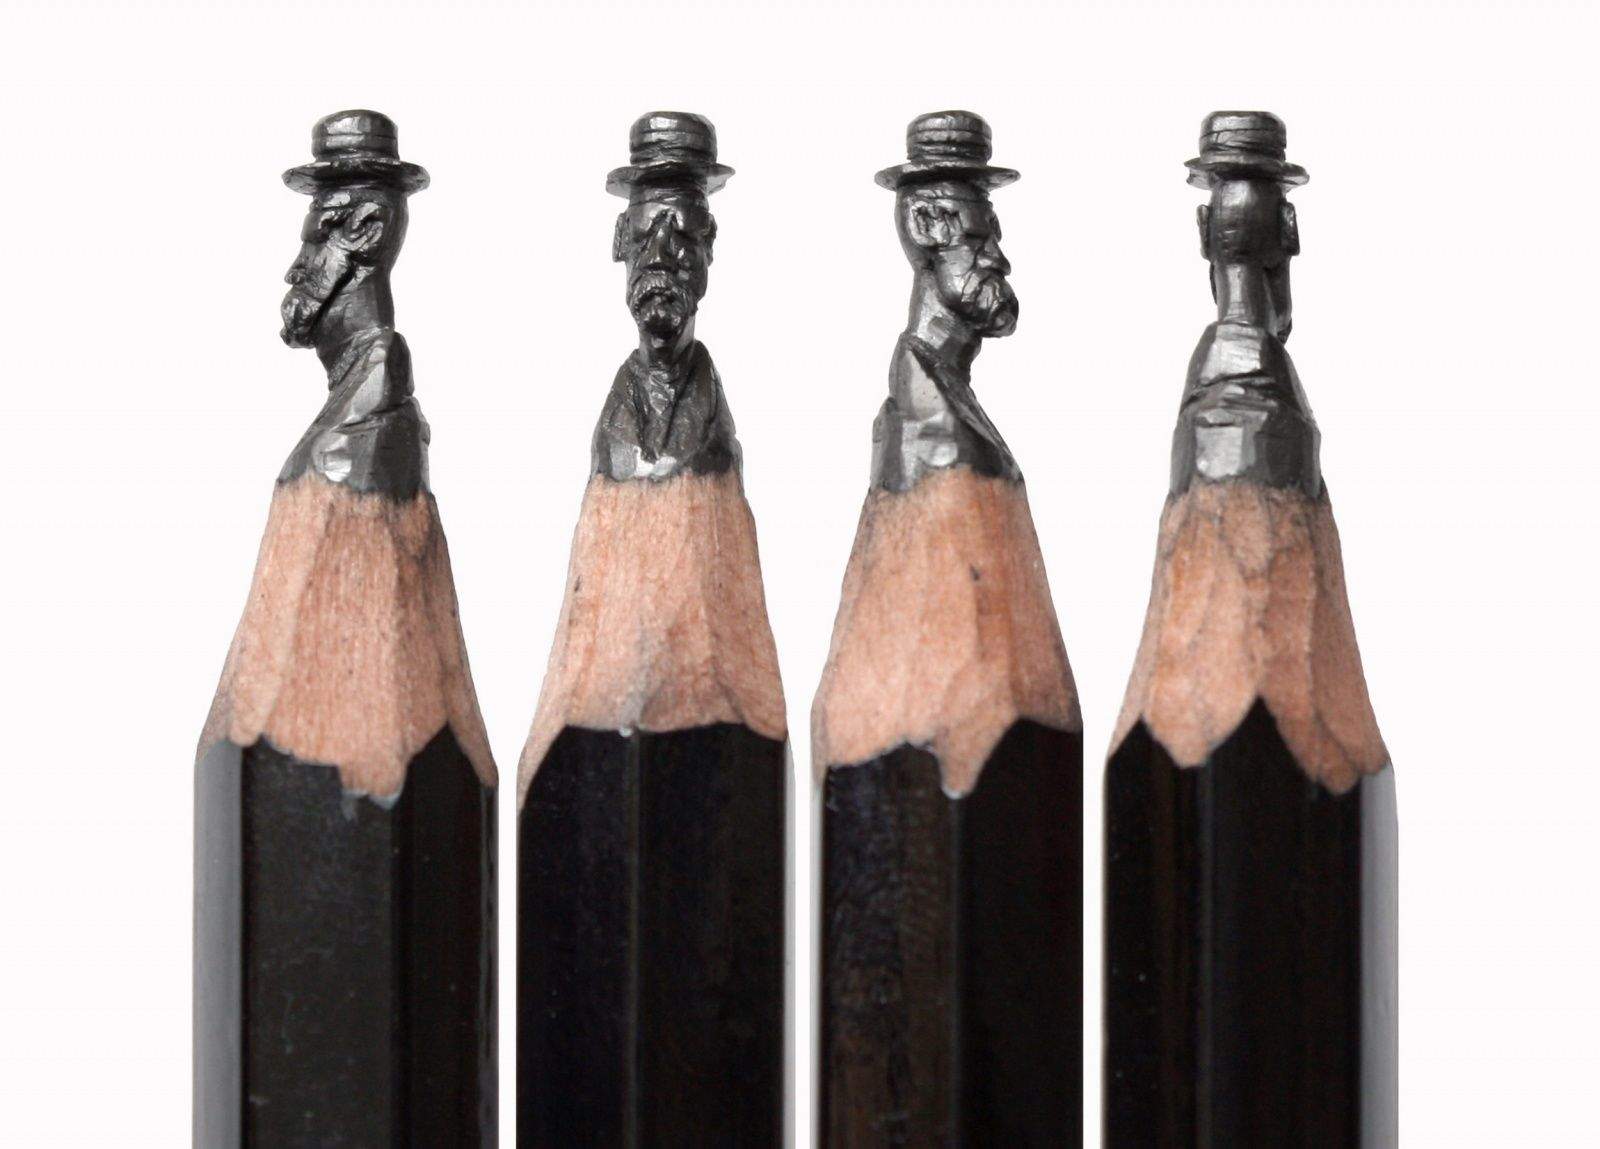 Pencil lead sculptures